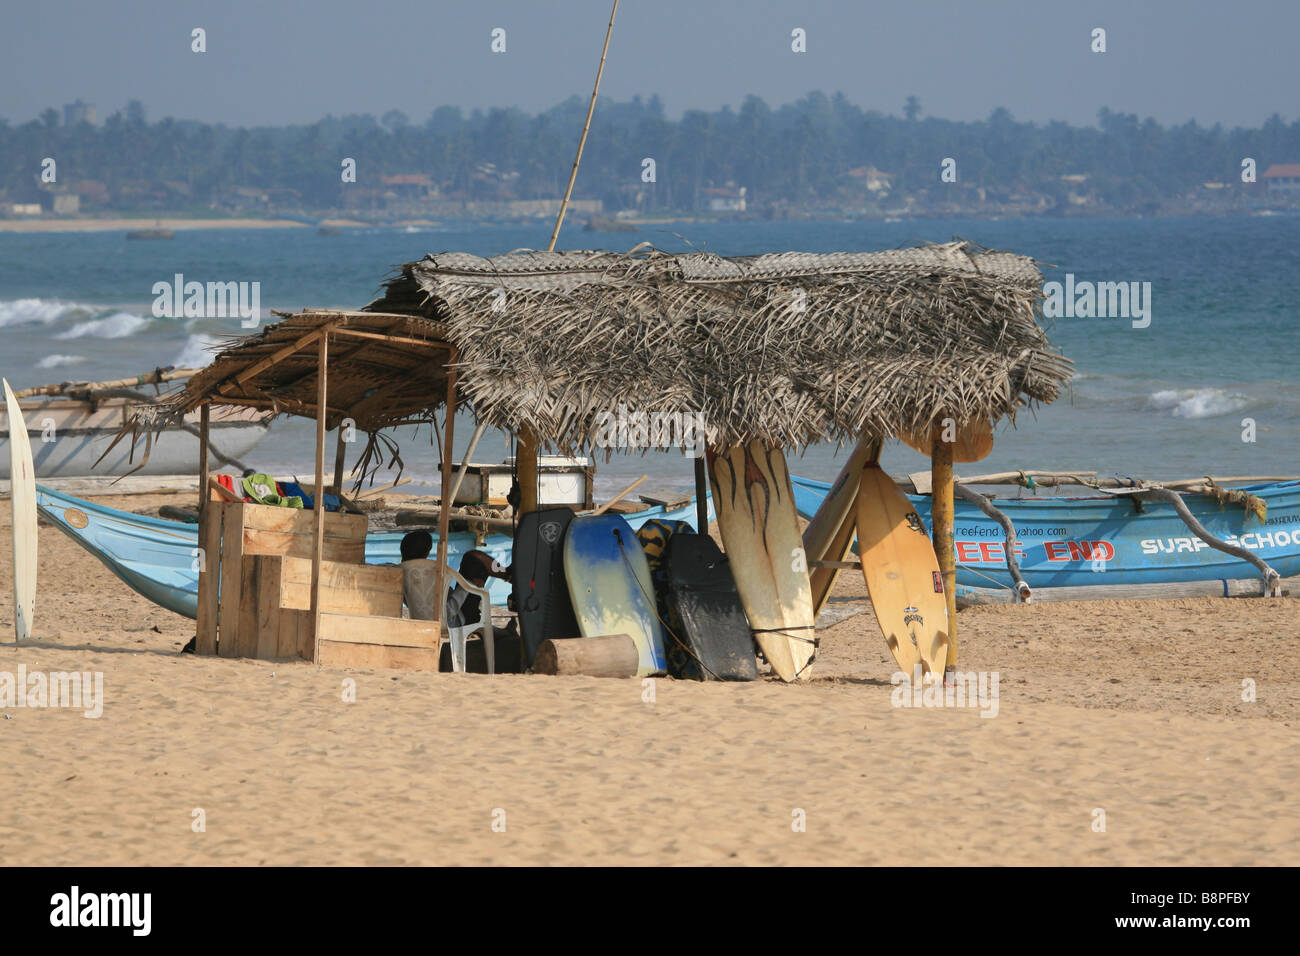 Tavole da surf per noleggi in corrispondenza di un surf shack, Hikkaduwa, Sri lanka. Foto Stock